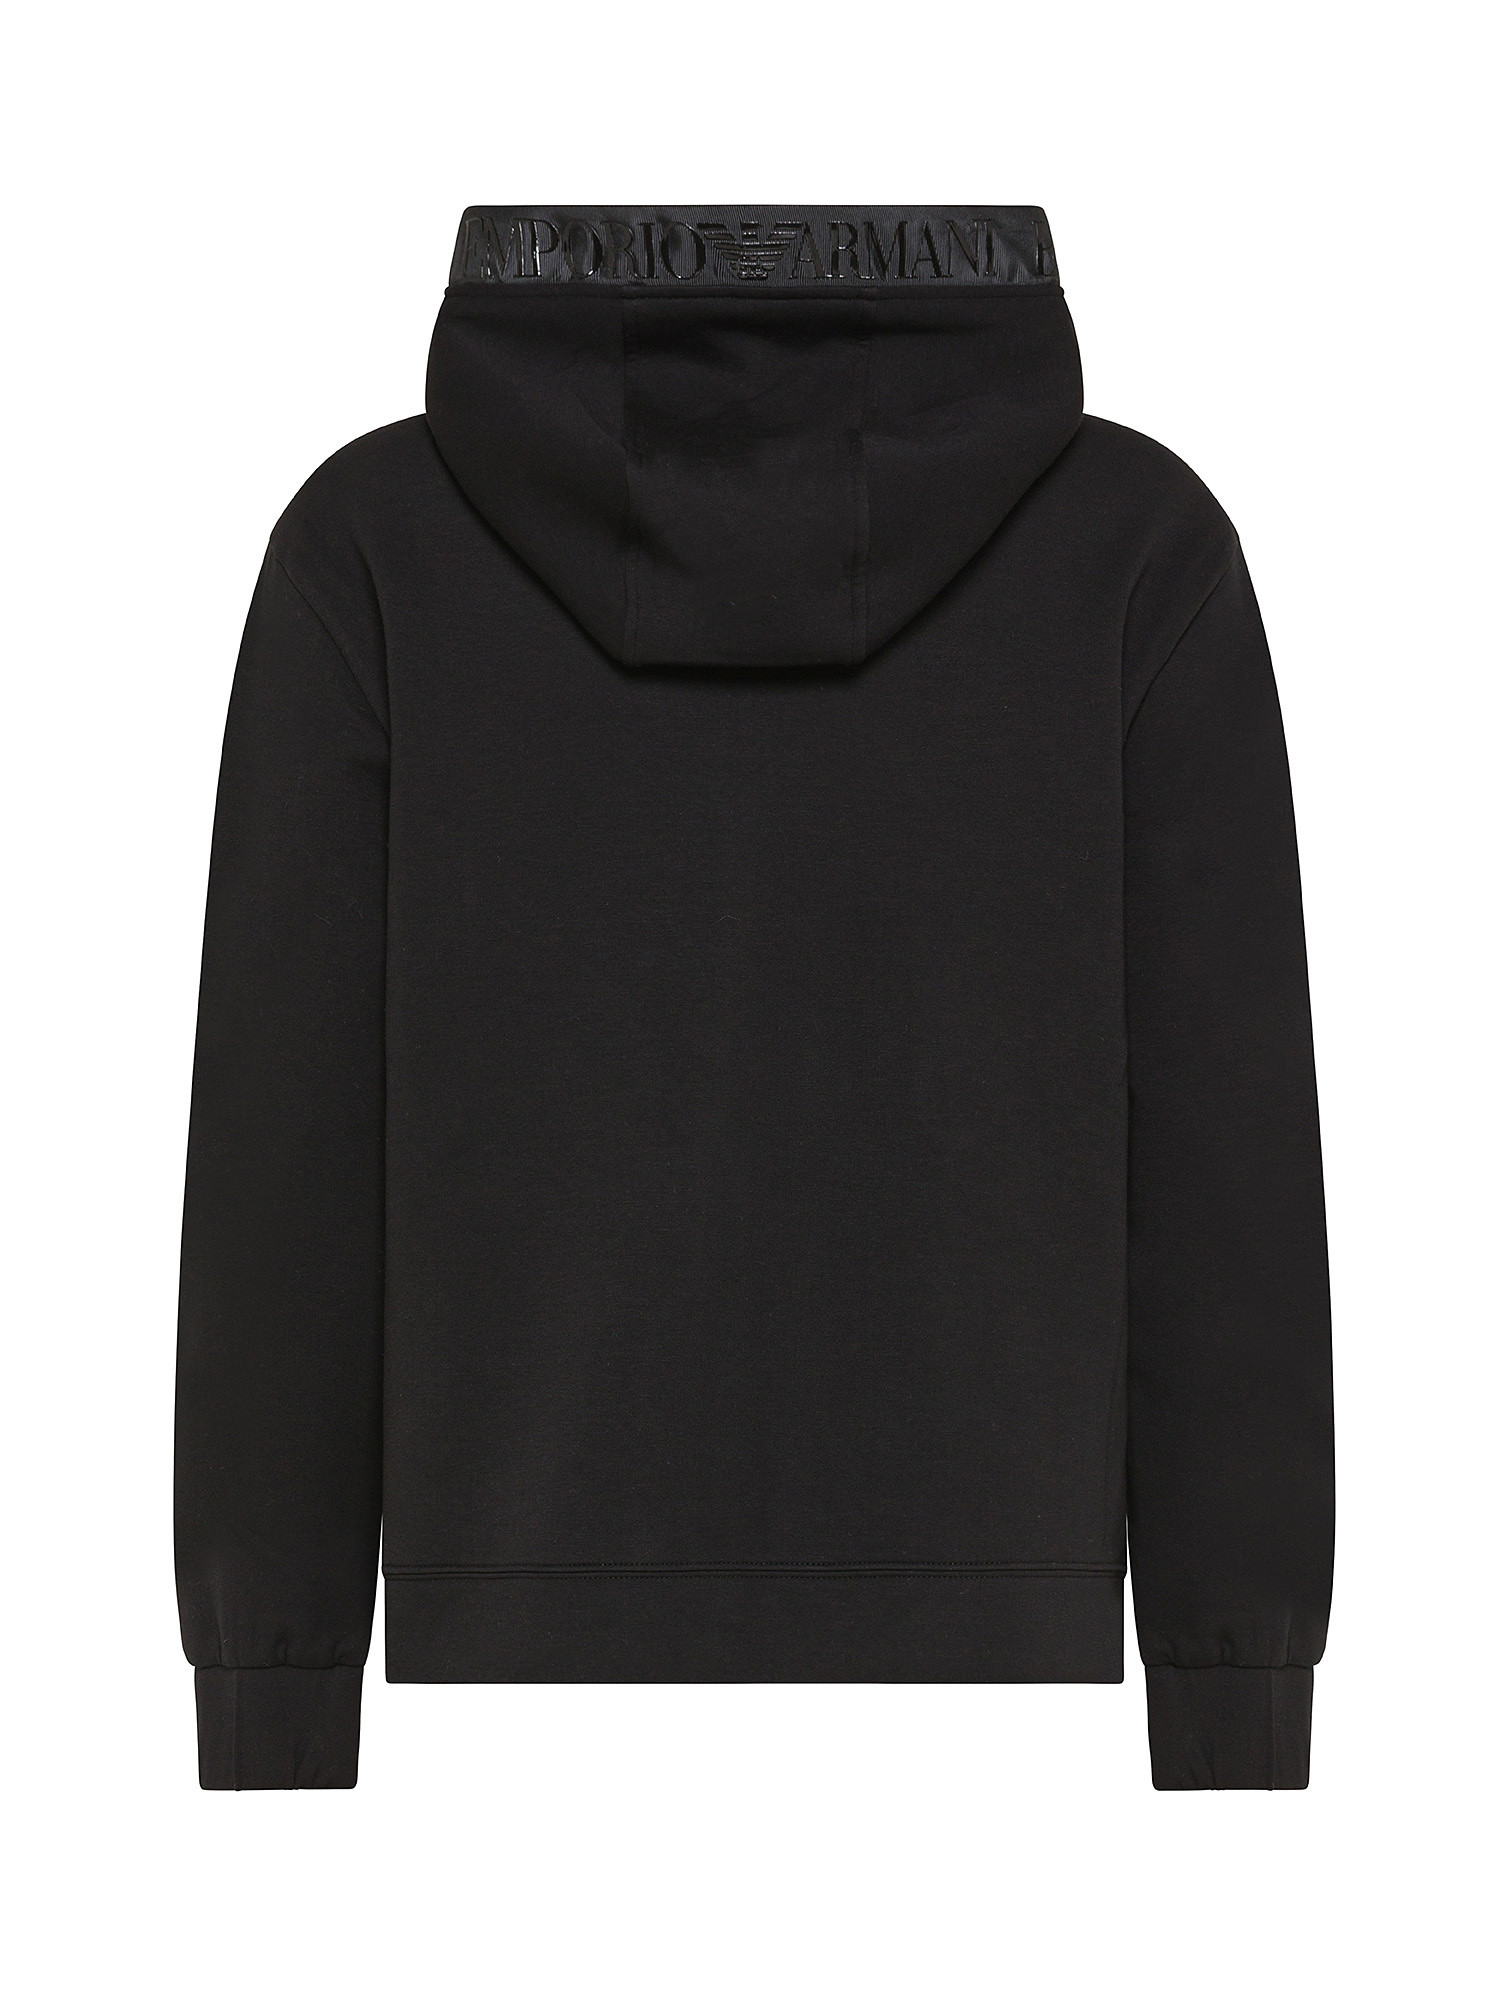 Emporio Armani - Full zip sweatshirt with hood and logo tape, Black, large image number 1